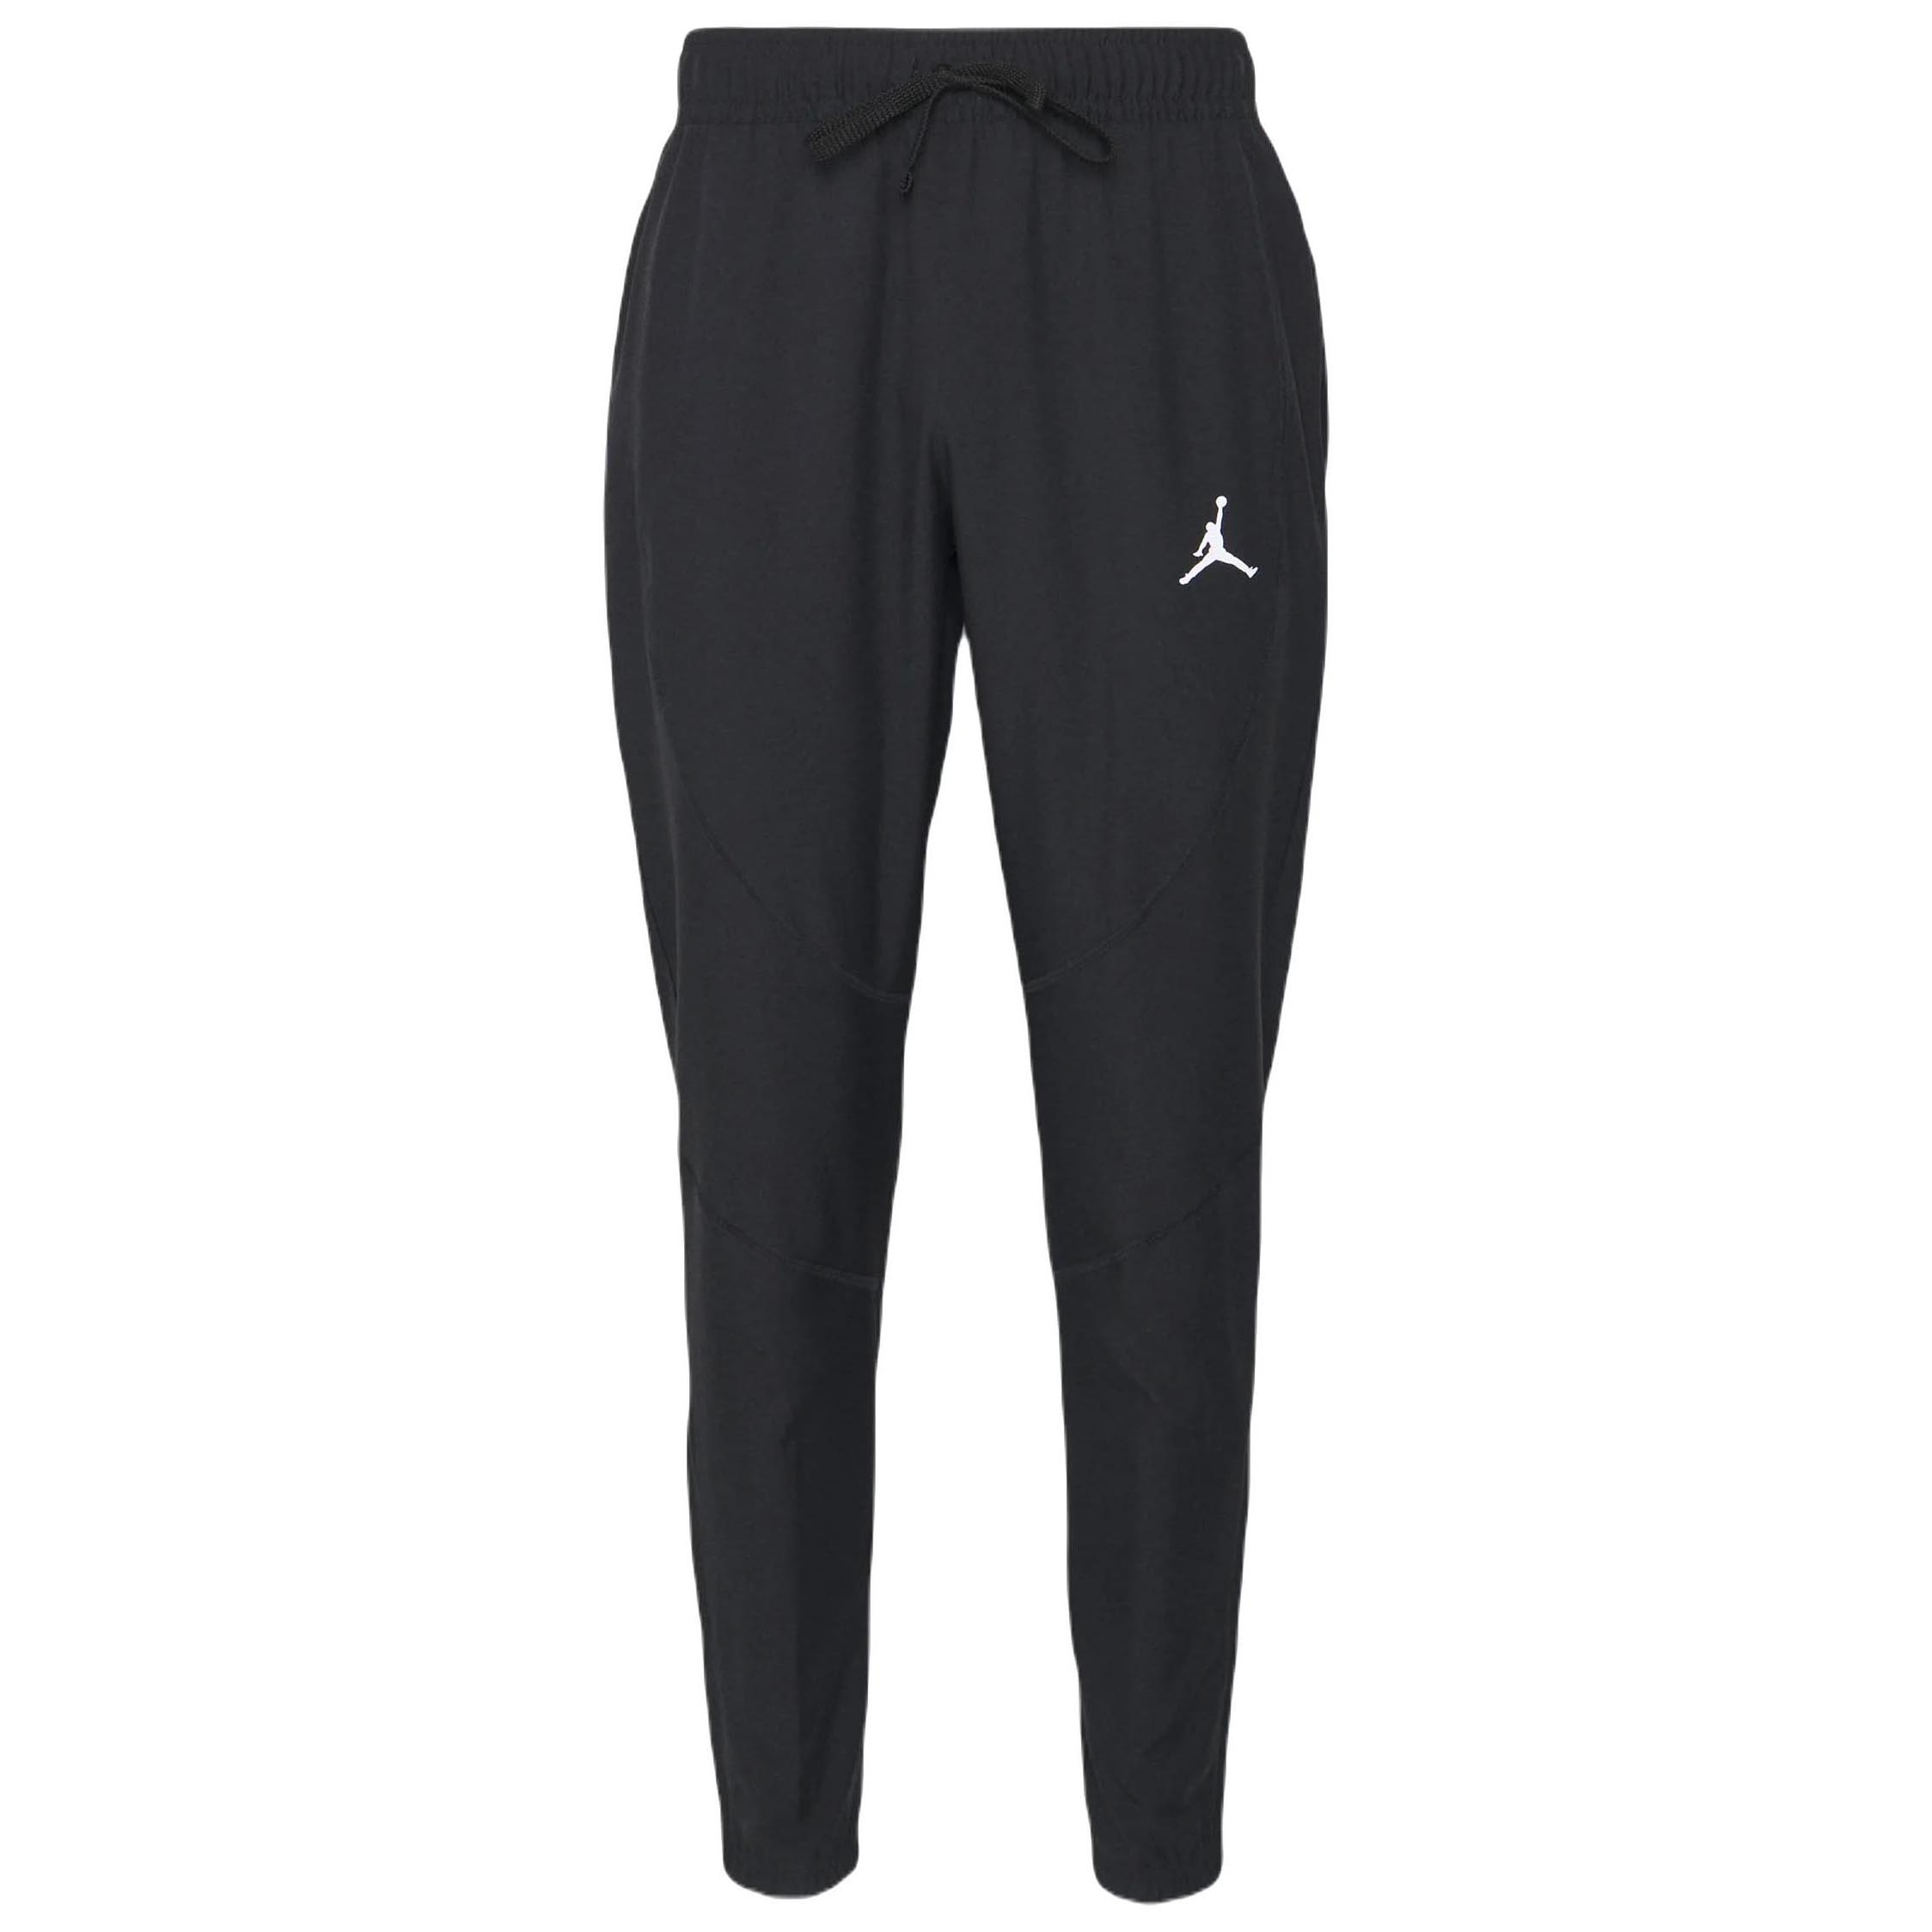 Спортивные брюки Nike Air Jordan Woven, черный спортивные брюки nike air jordan flight pant черный